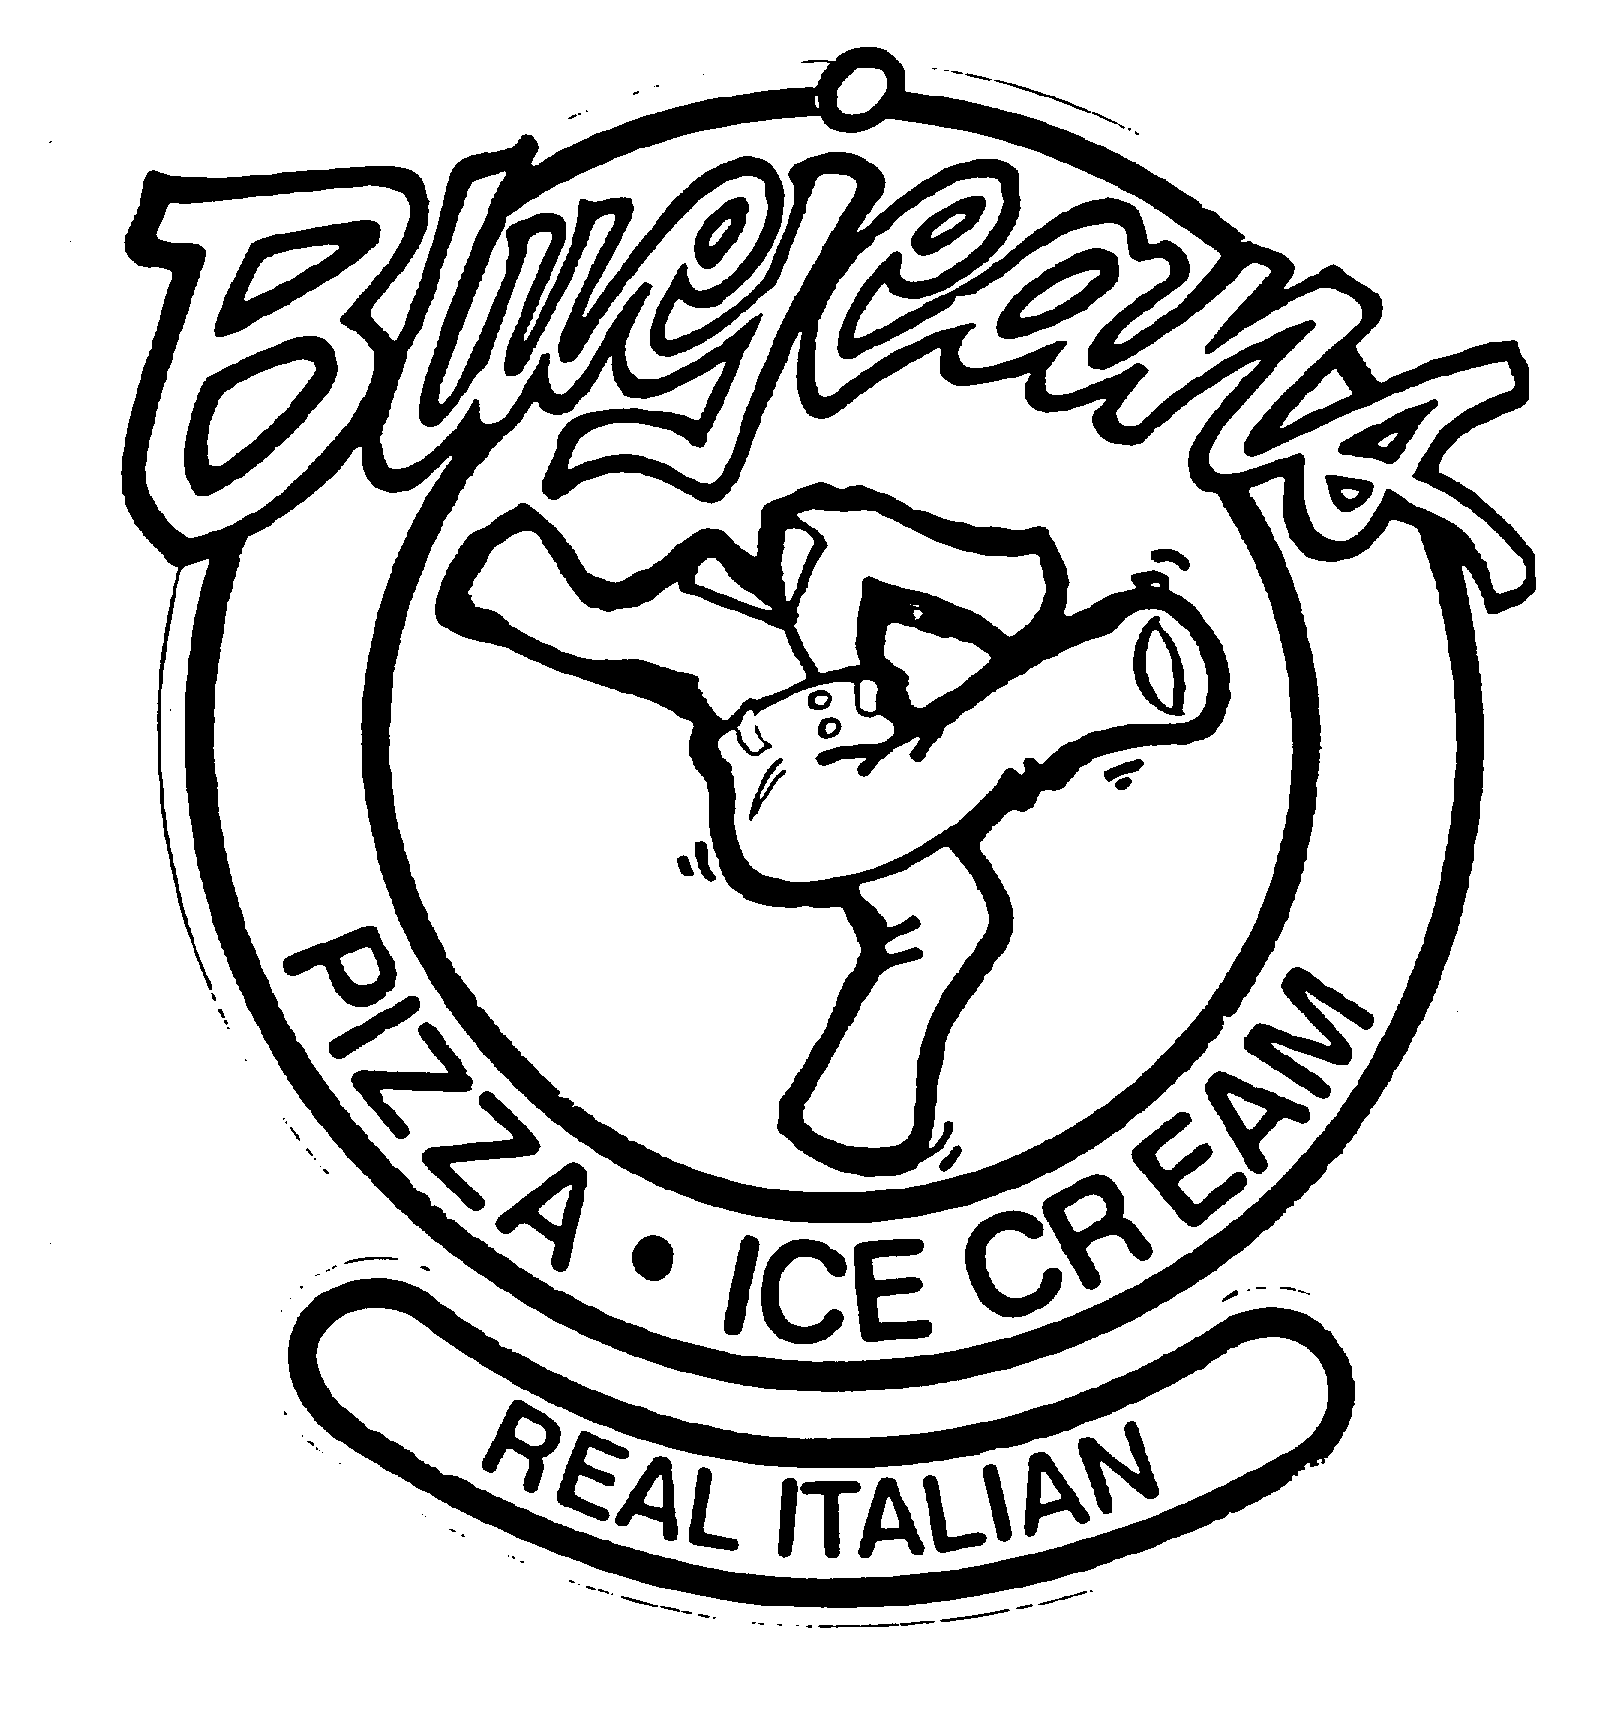  BLUEJEANS PIZZA ICE CREAM REAL ITALIAN